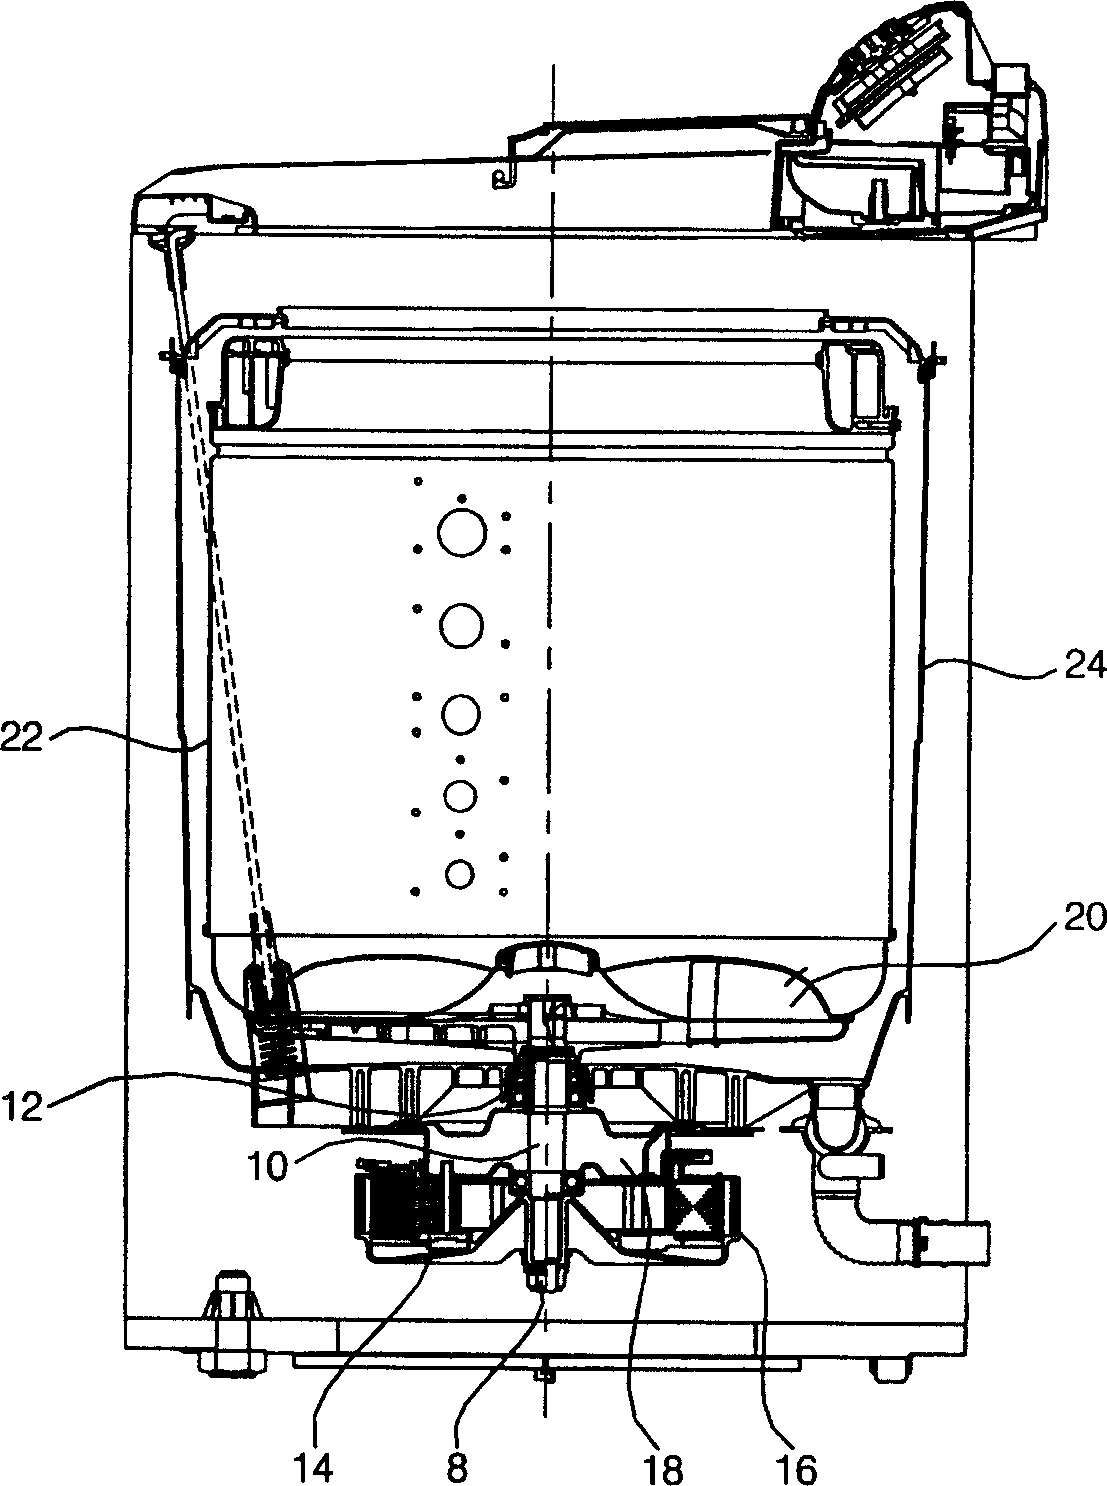 External rotor type dynamo of washing machine